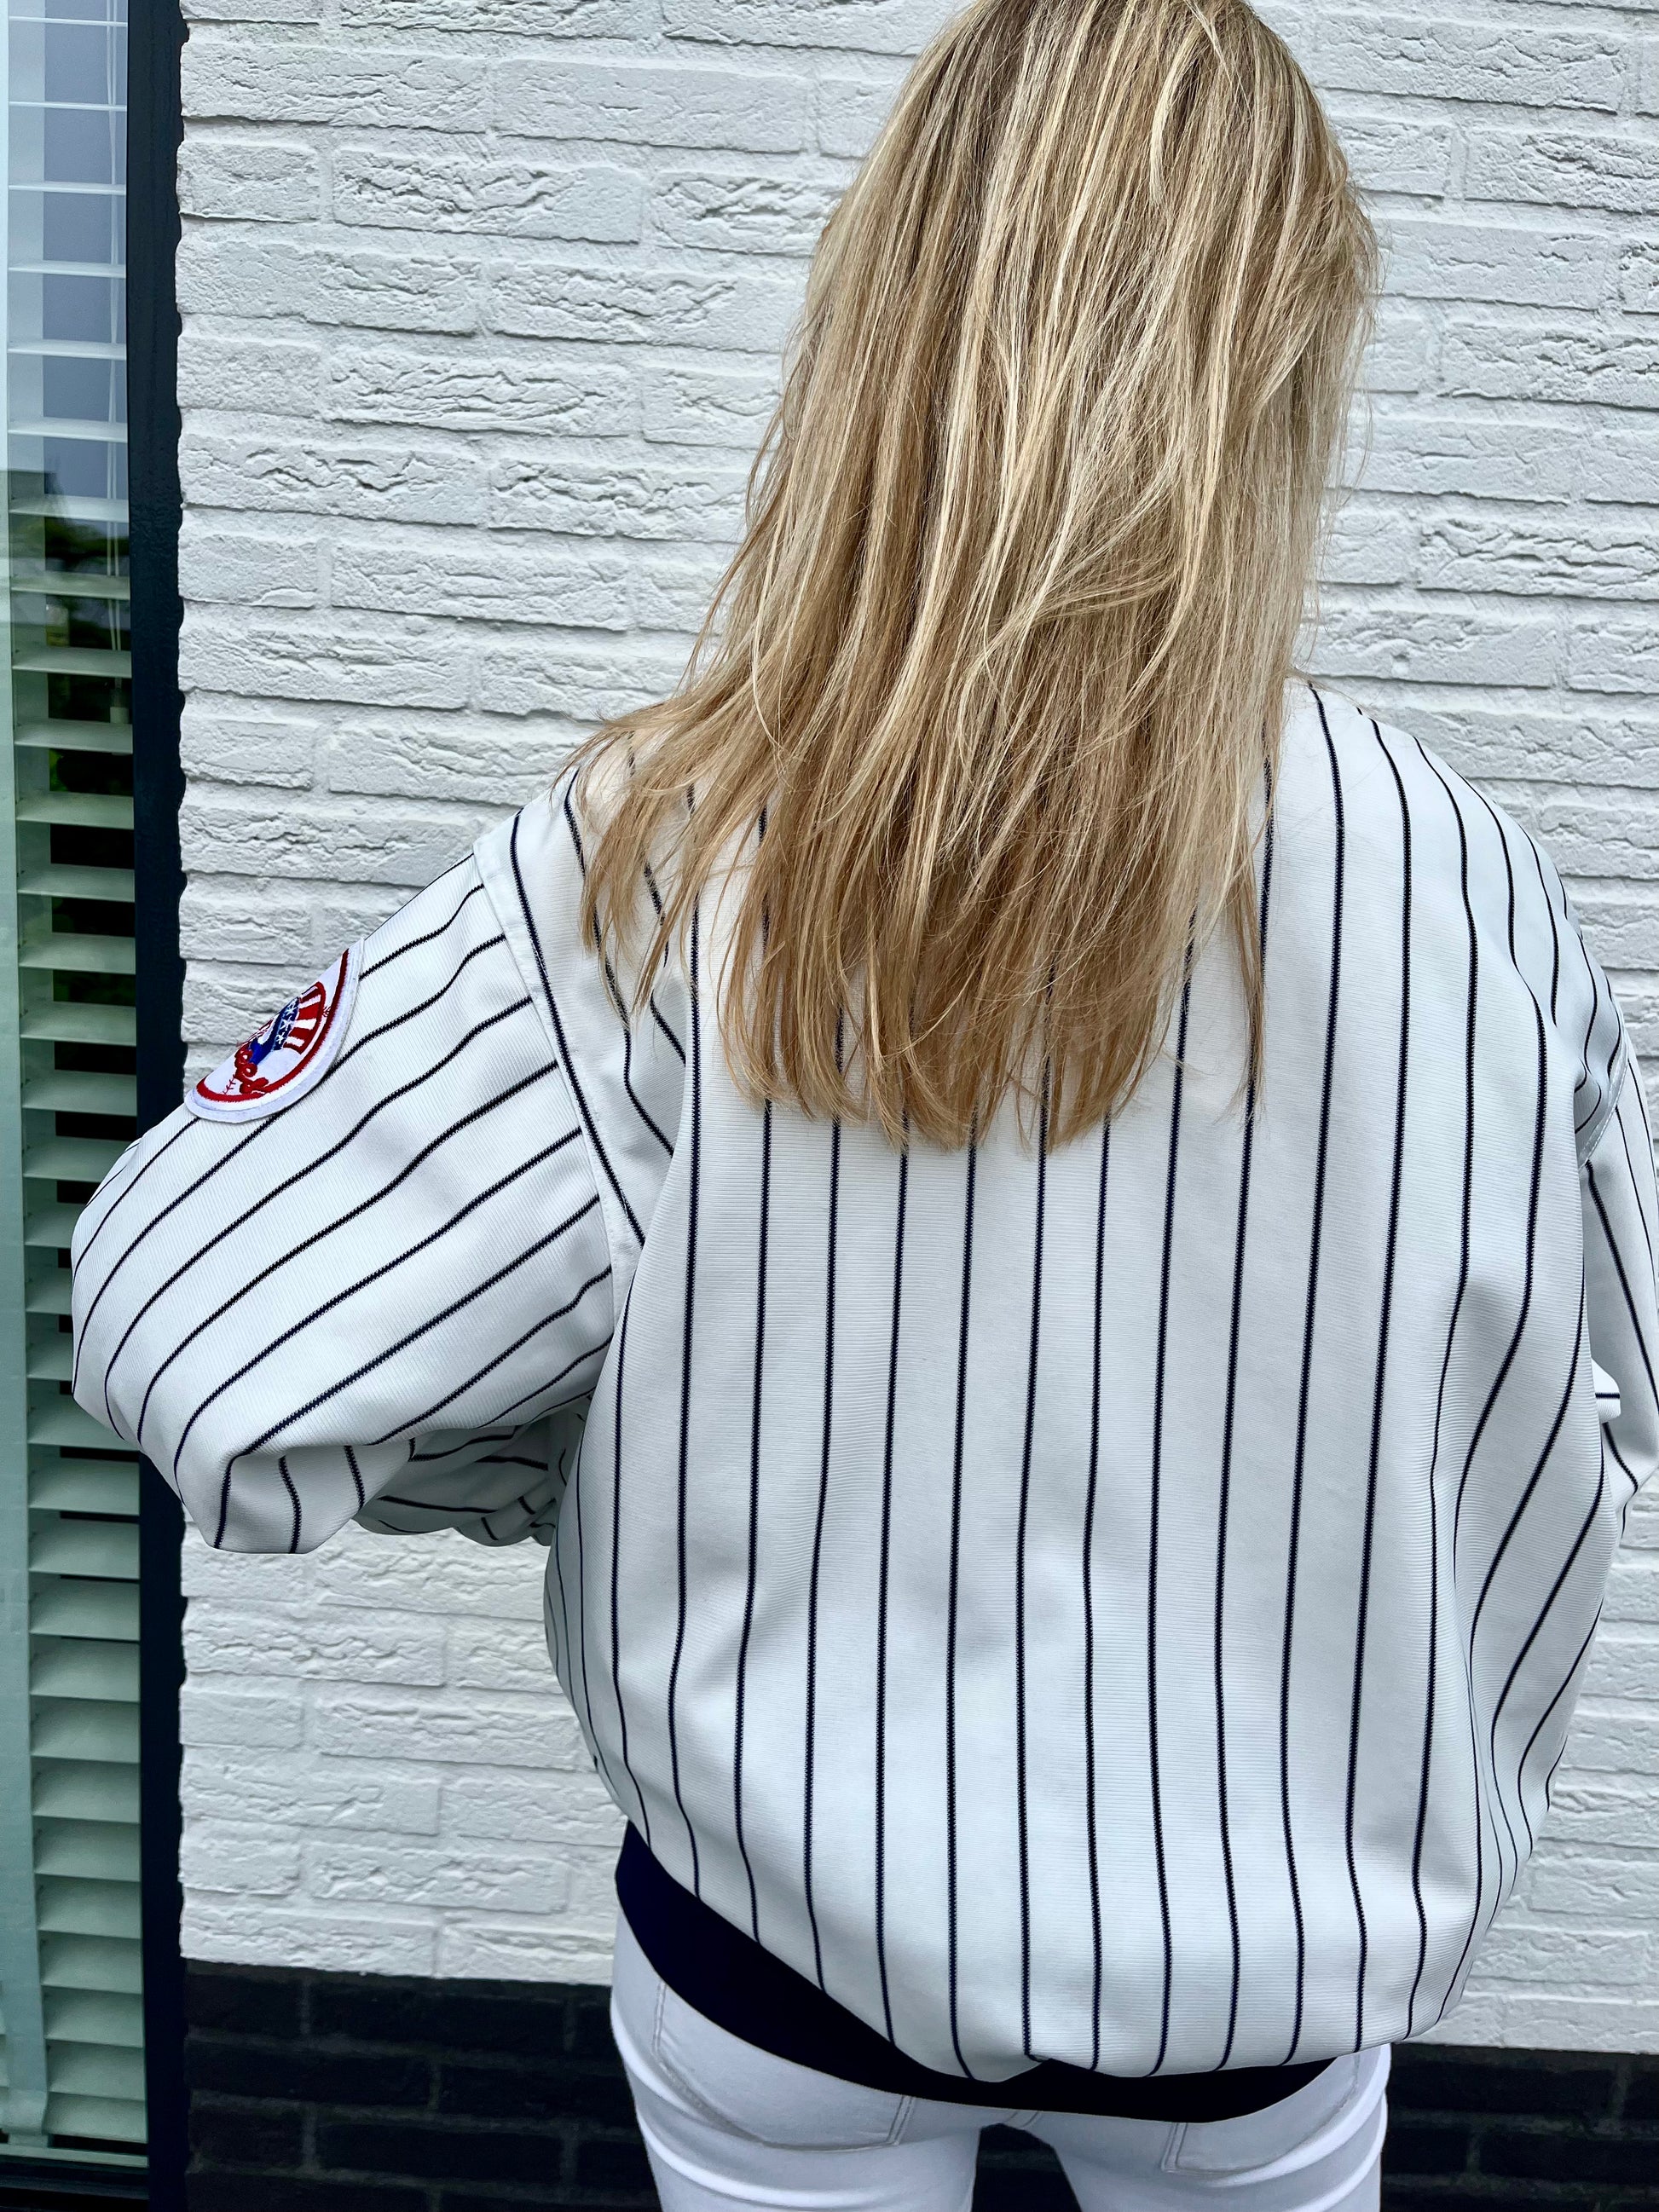 Vintage NY Yankees striped jacket